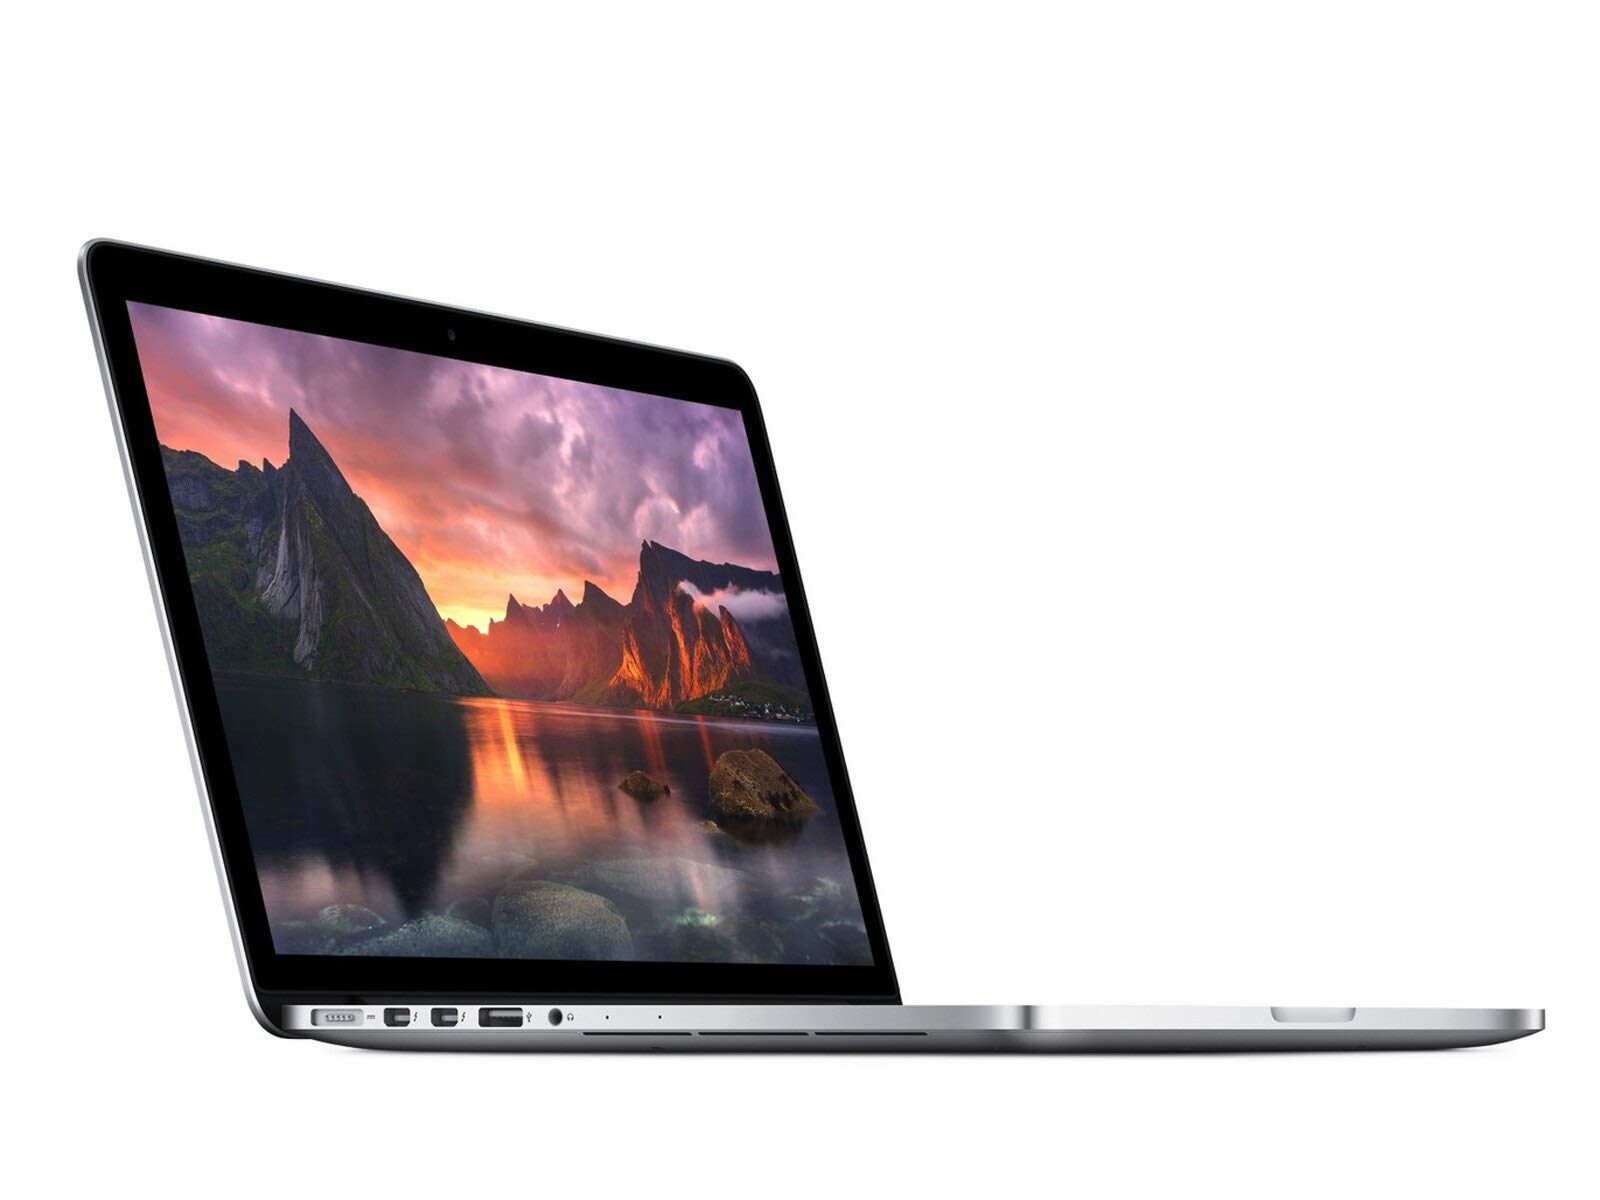 Apple MacBook Pro MF839ll/a Early 2015 Silver, 13.3" - I7-5557u 3.1GHZ (16gb, 256g Ssd) (Renewed)